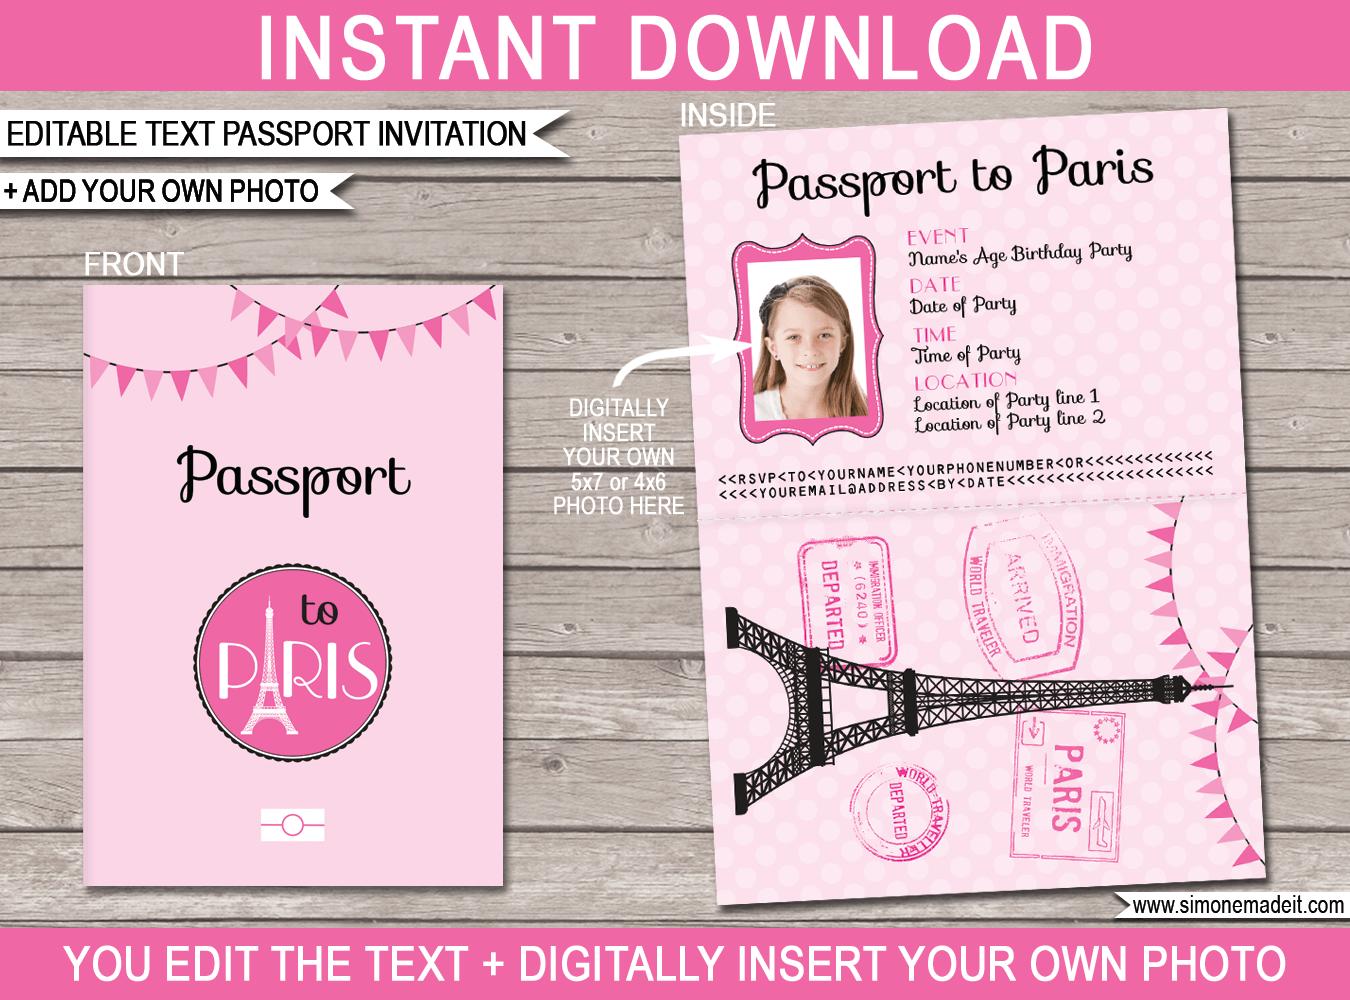 Paris Passport Invitation Template with Photo | Paris Theme Birthday Party Printables | Editable & Printable DIY Template | INSTANT DOWNLOAD via simonemadeit.com #passporttoparis #parispassport